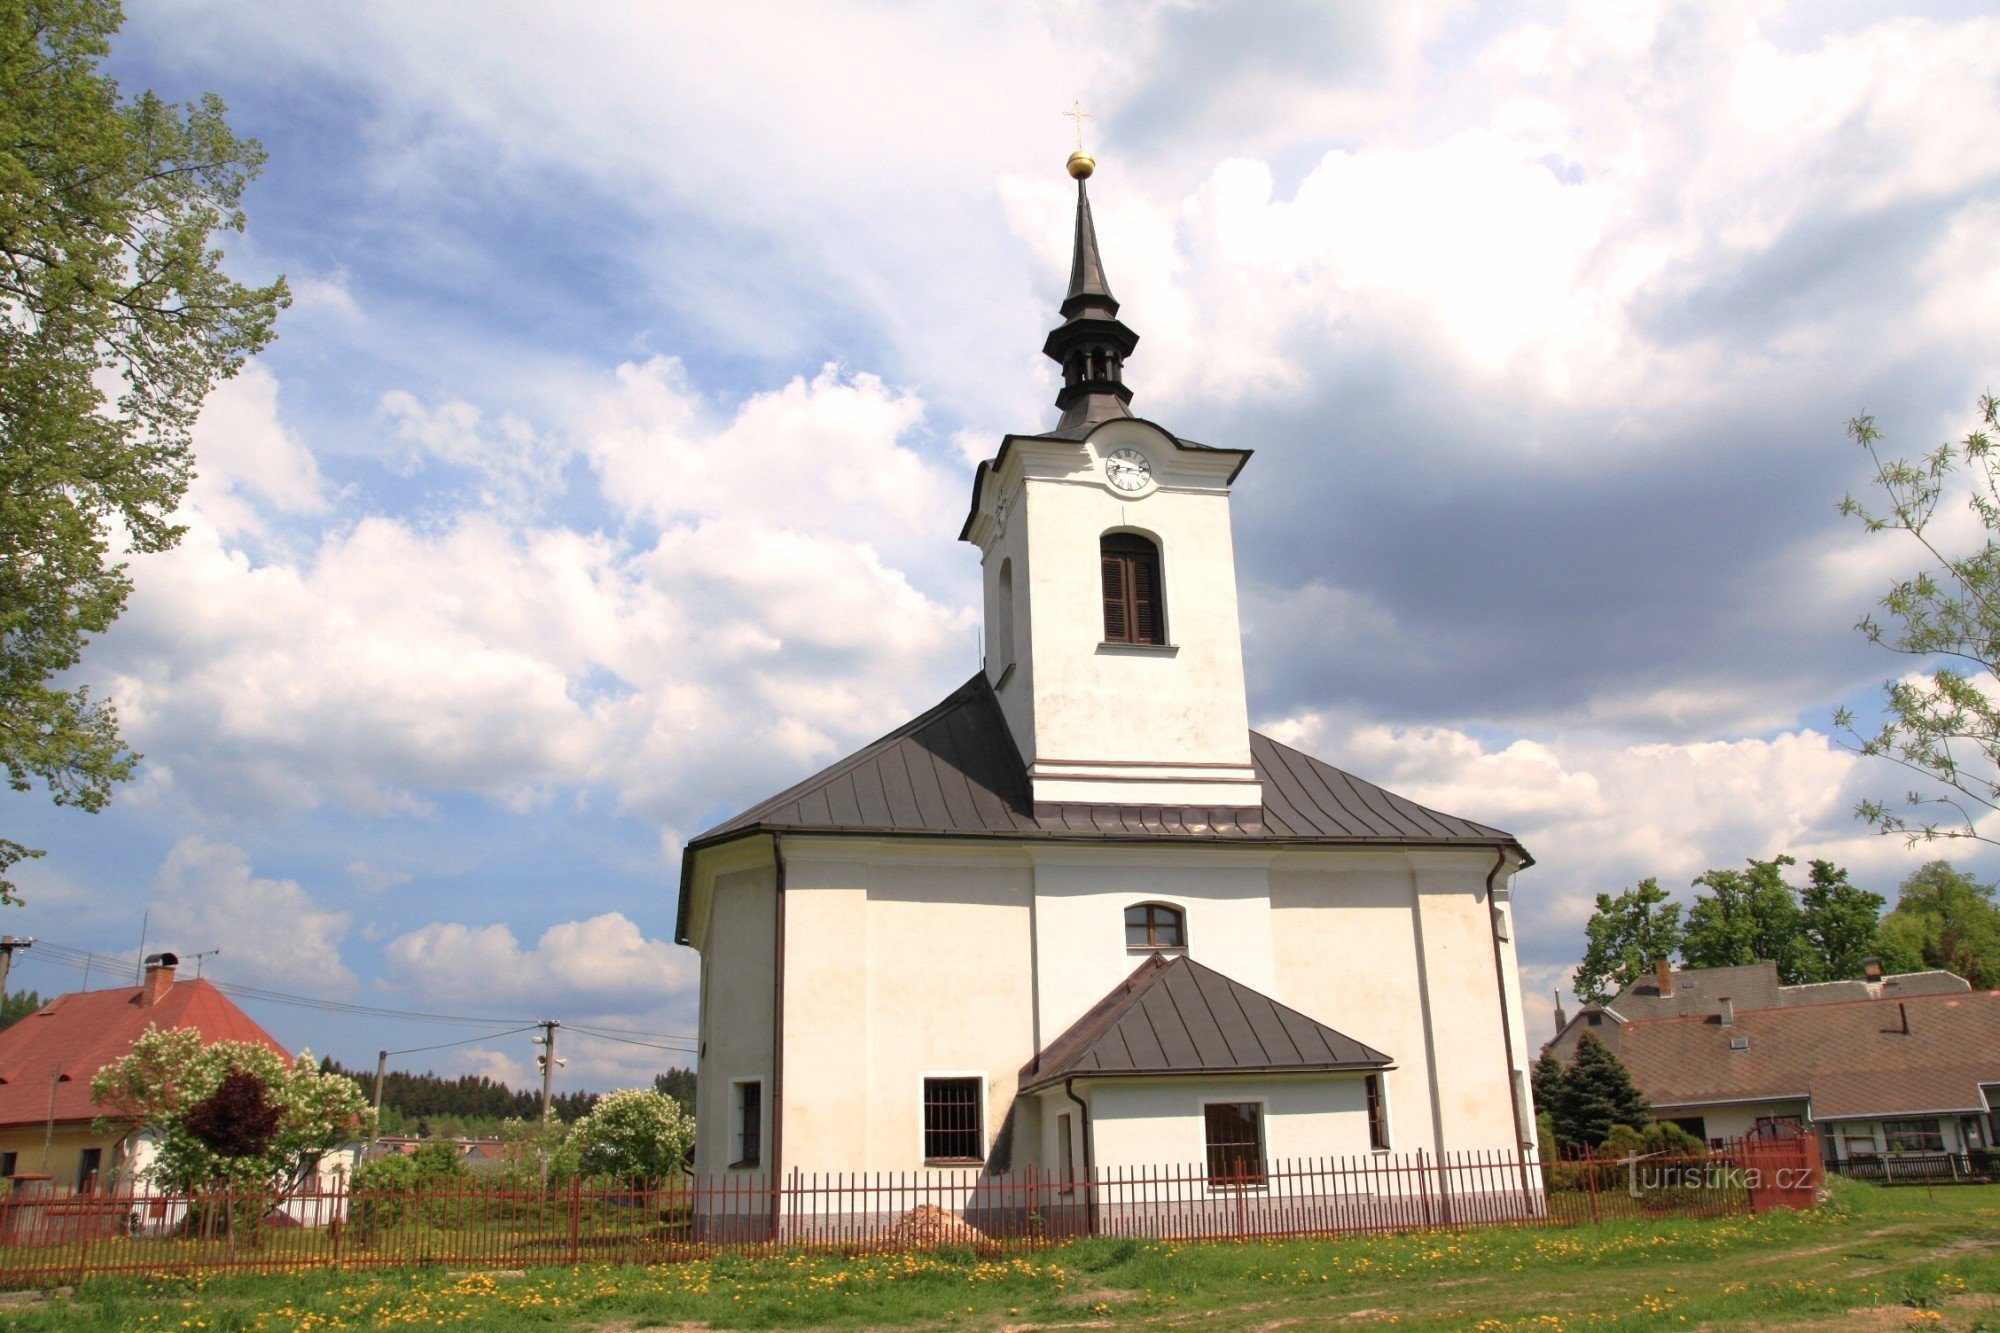 Vojnův Městec - Pyhän kirkko Andrew